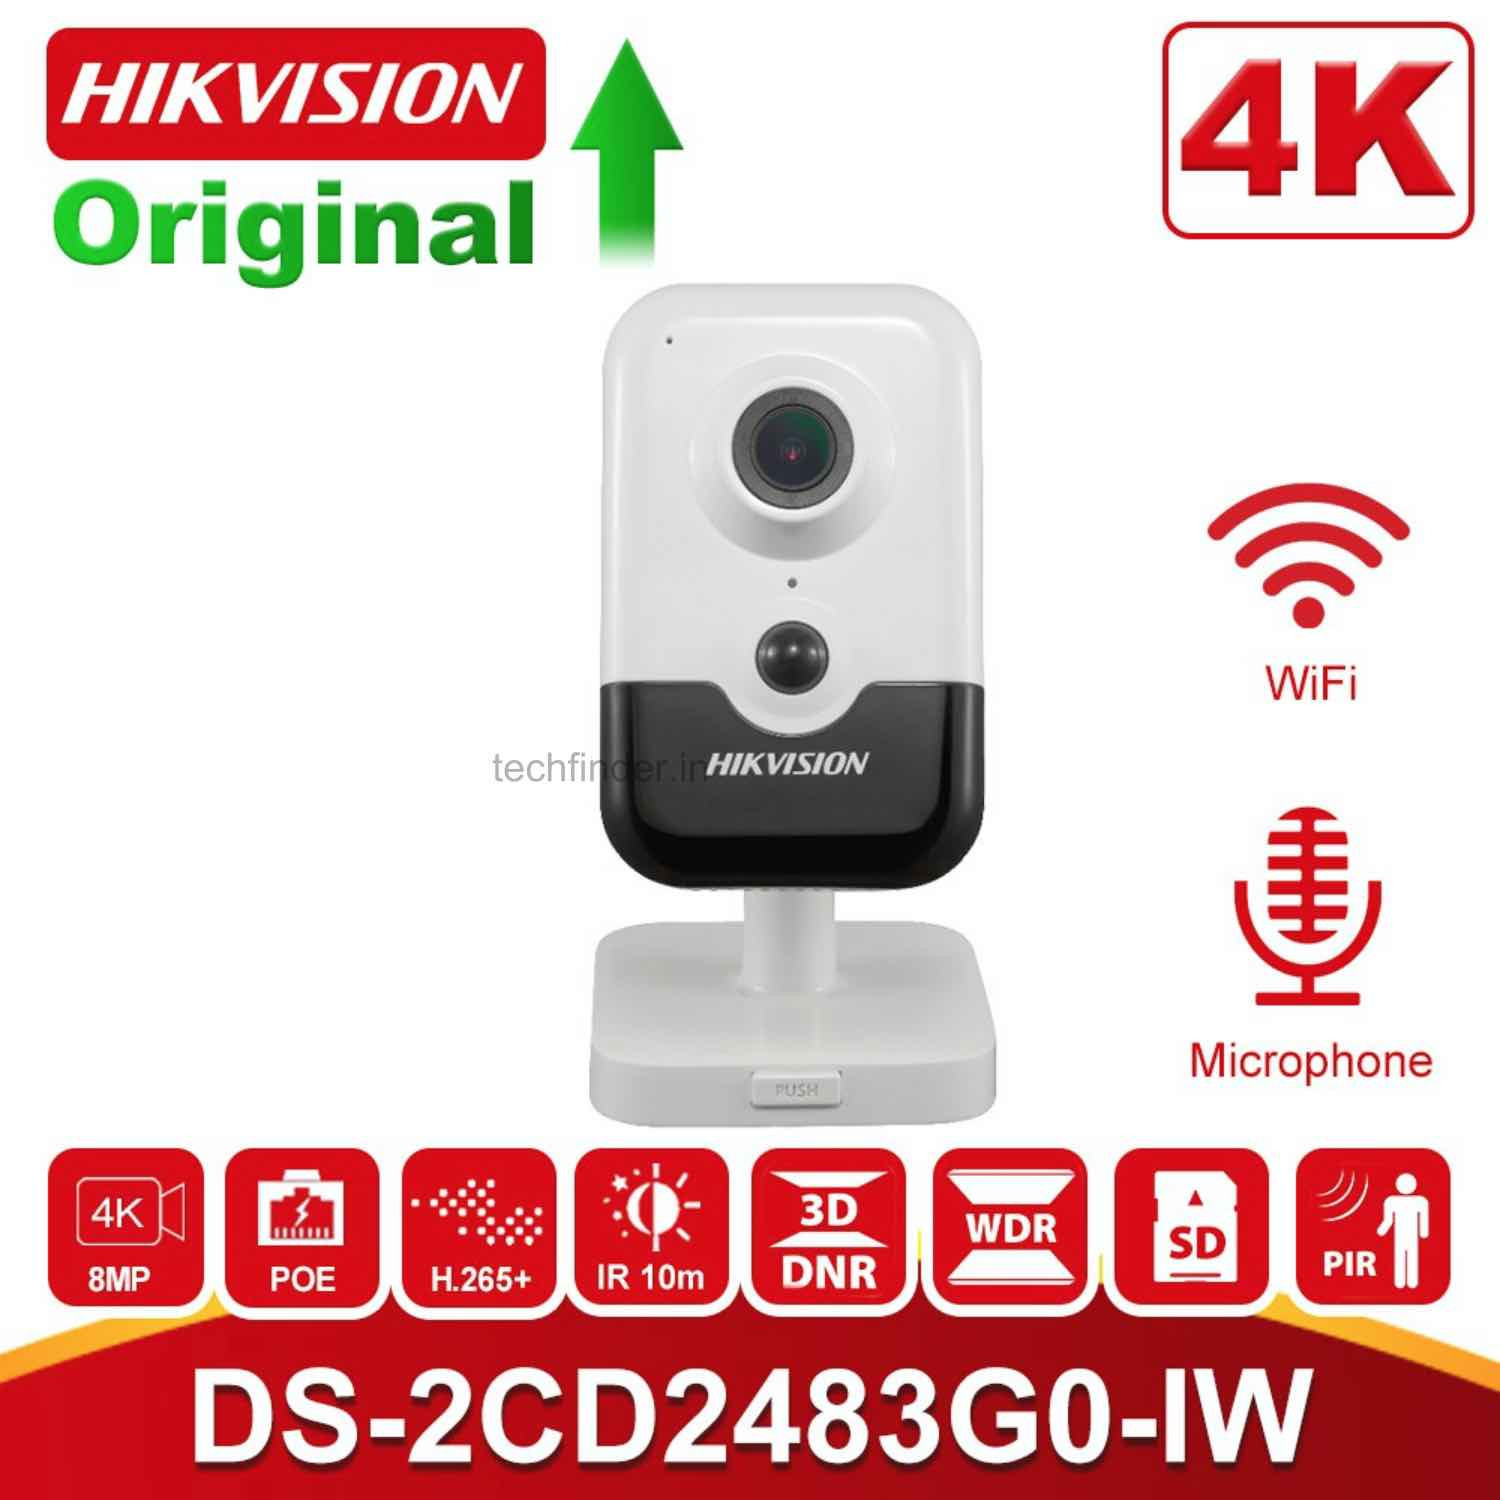 Hikvision DS-2CD2463G0-I(W) 6MP IR Wi-Fi Fixed Cube Spy Ip Camera